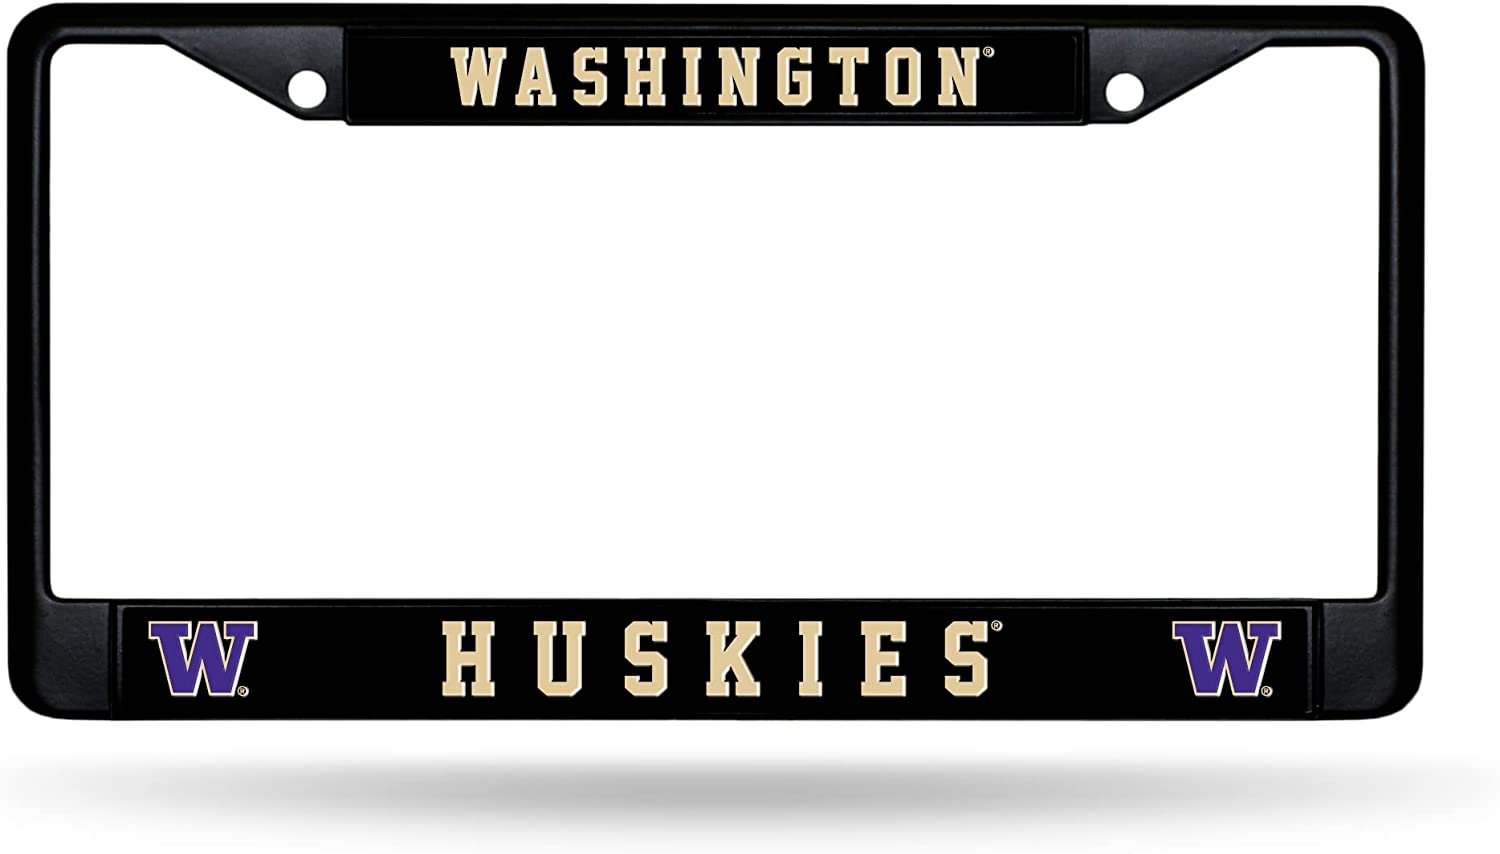 University of Washington Huskies Black Metal License Plate Frame Chrome Tag Cover 6x12 Inch